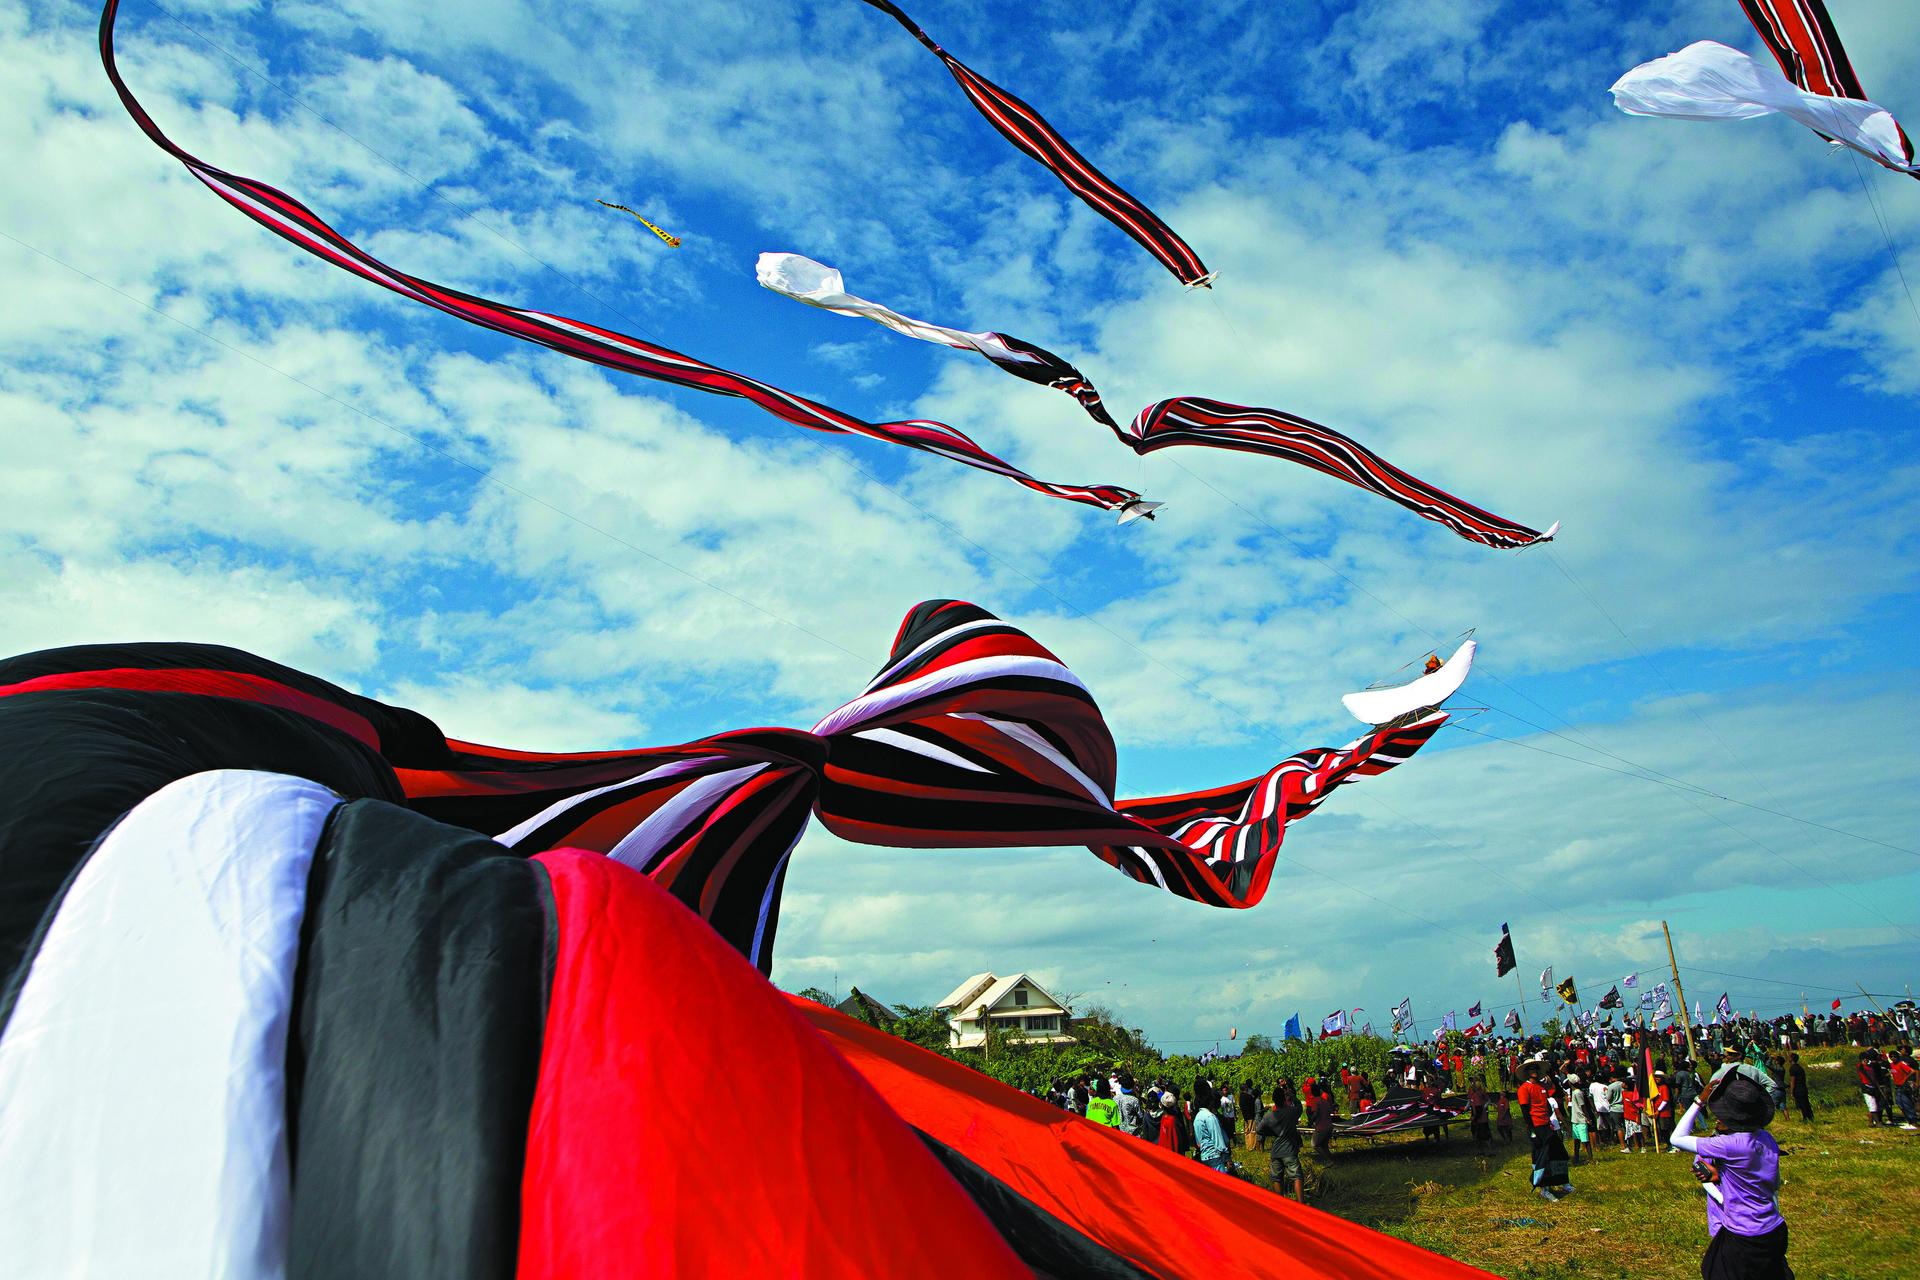 Traditional black, red and white kites take to the skies at the Bali Kite Festival in Pantai Padang Galak, Sanur.